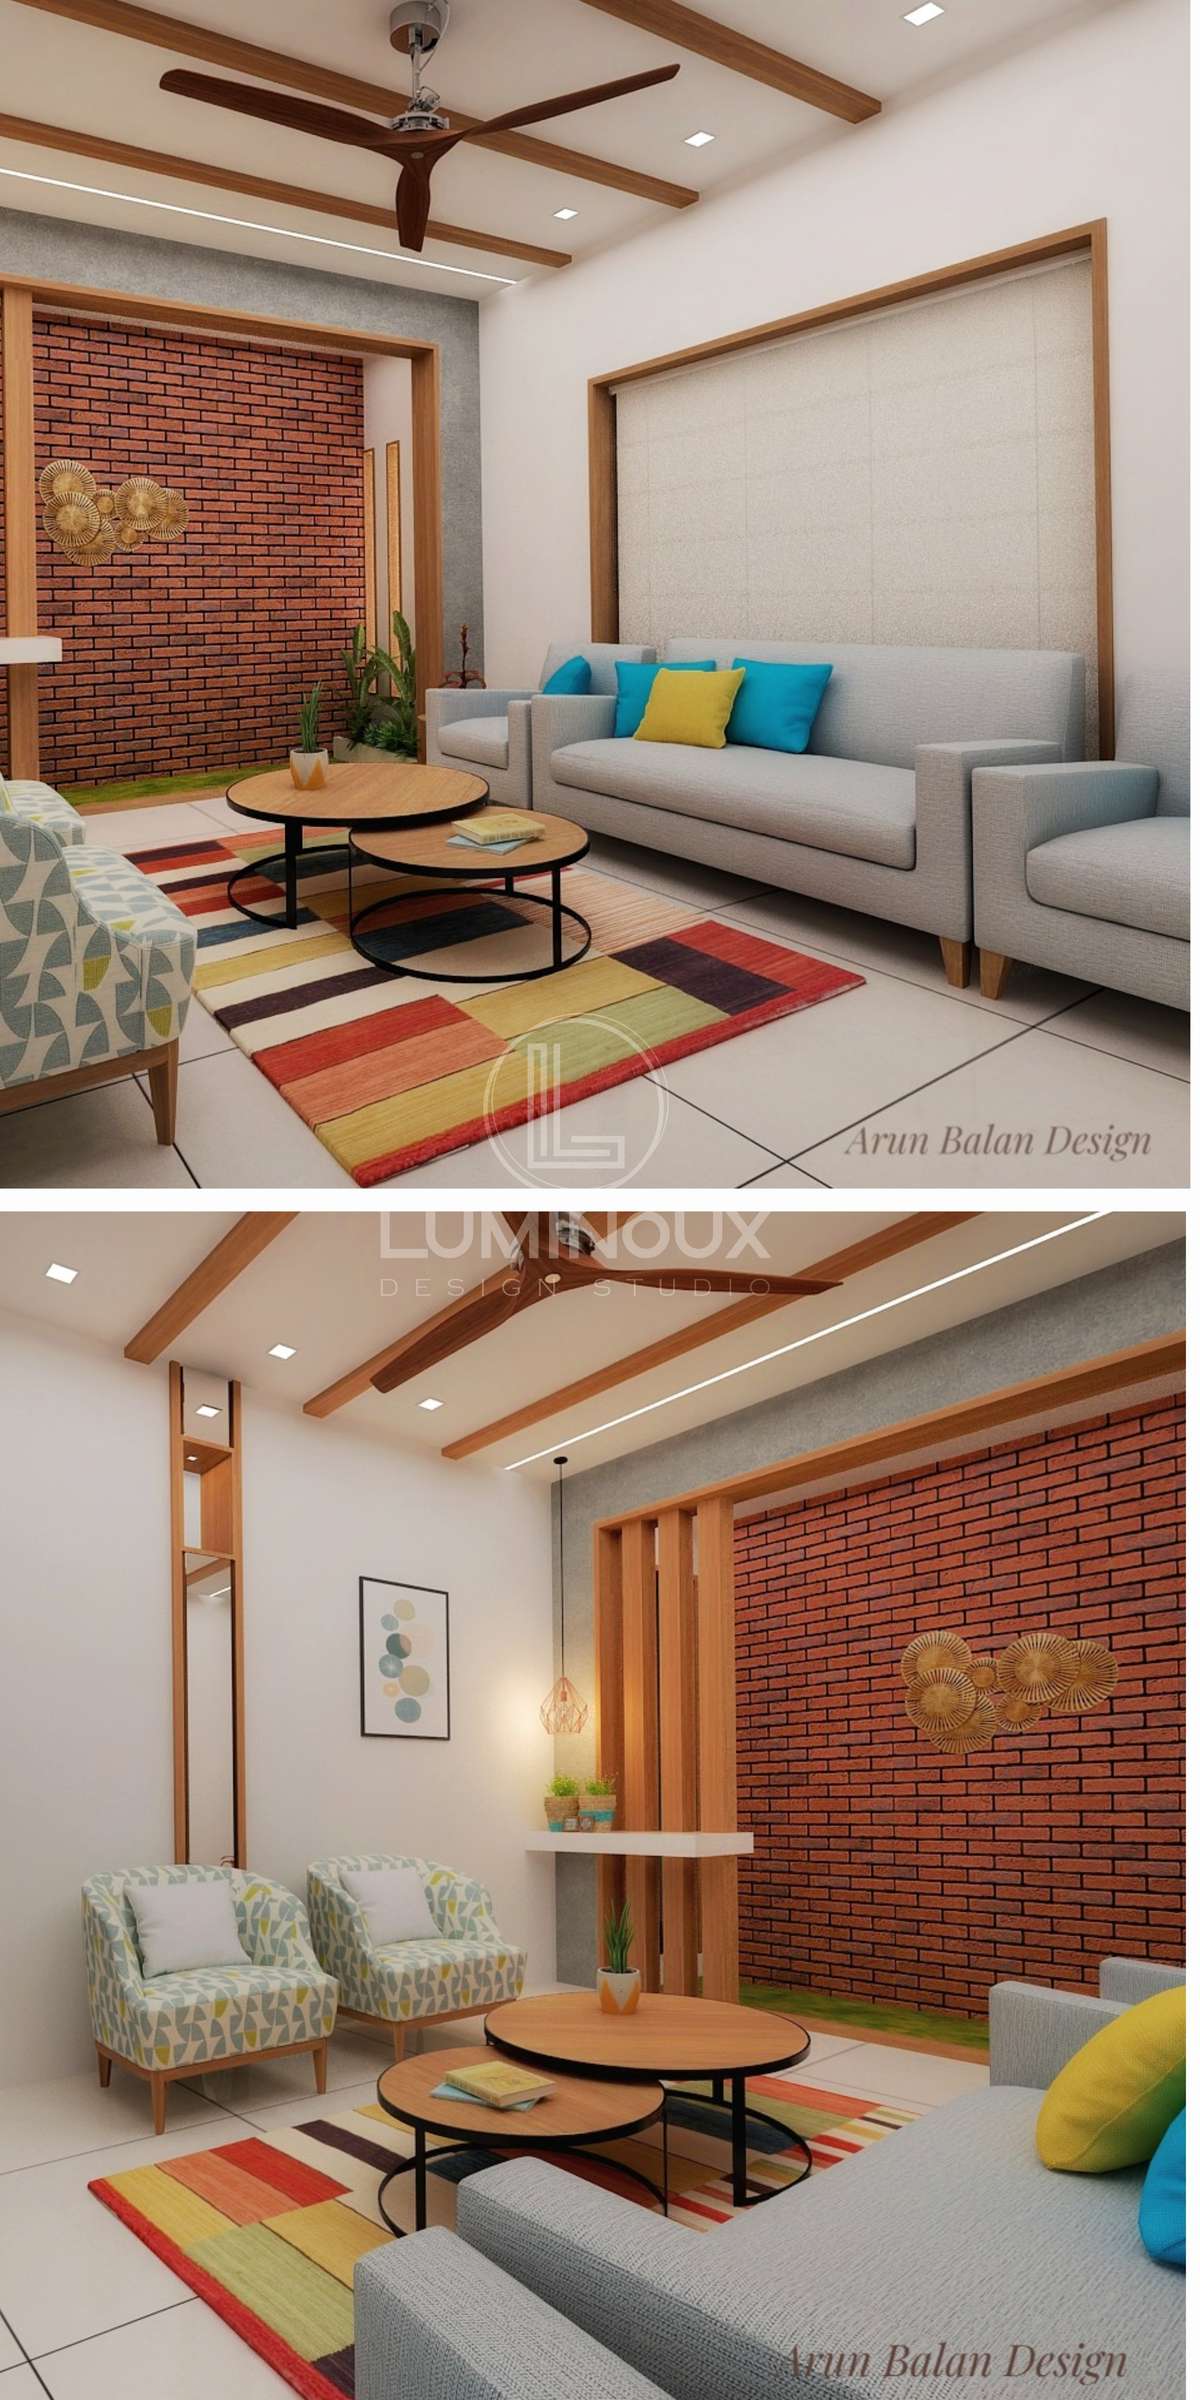 Drawing Room Design ðŸŒ¼
LUMINOUX DESIGN STUDIOðŸ’«  #Architectural&Interior  #interiordesignÂ   #drawingroom  #LivingroomDesigns  #3Ddesign  #3Dvisualization